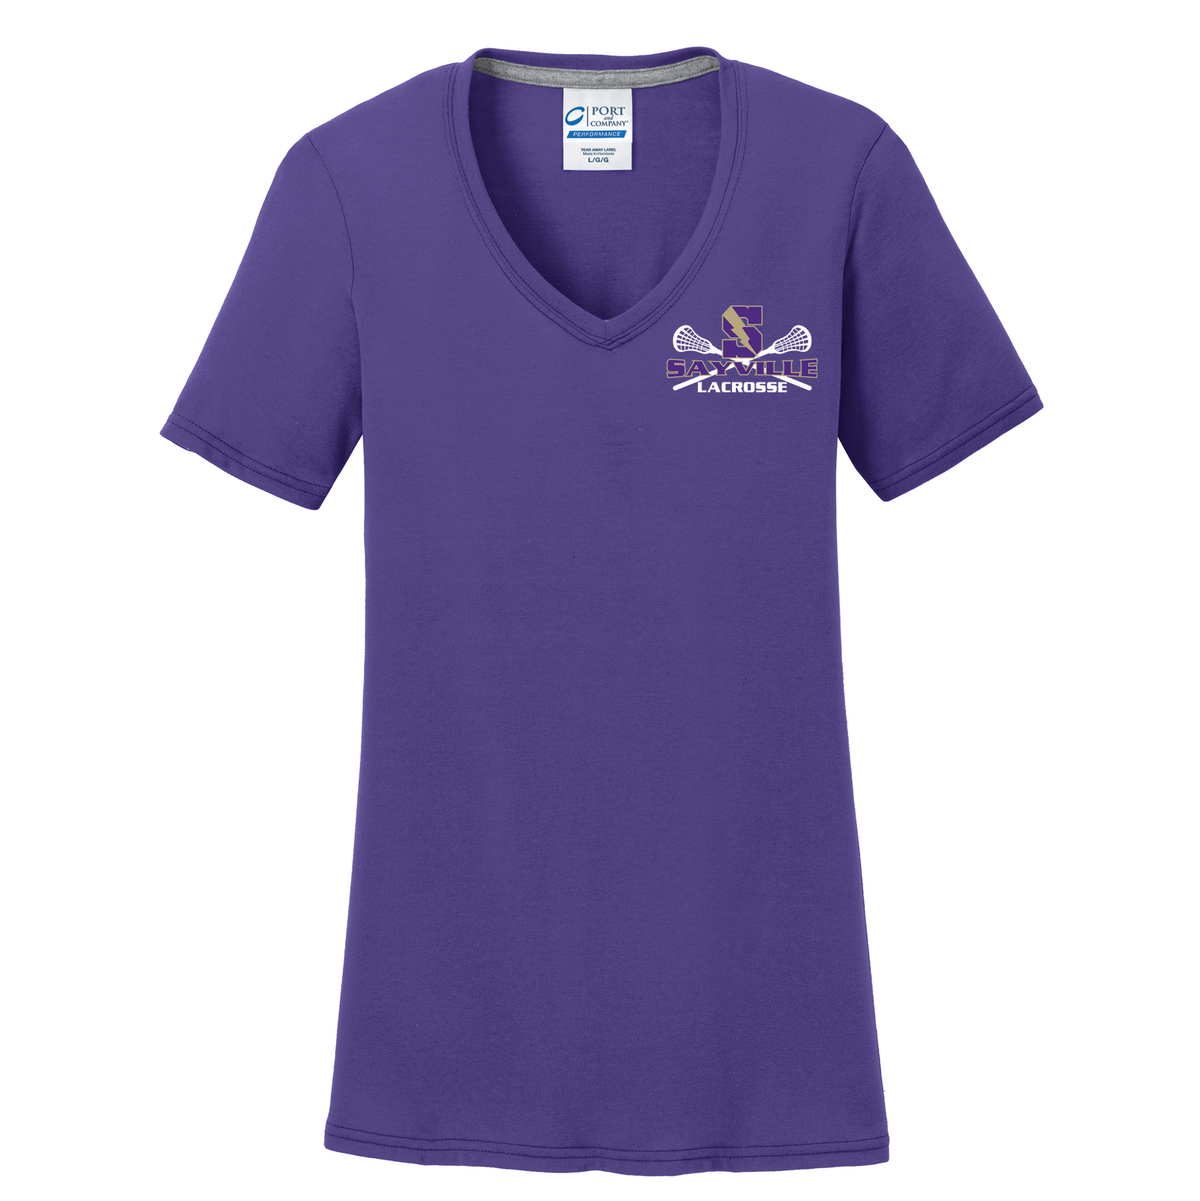 Sayville Lacrosse Women's T-Shirt